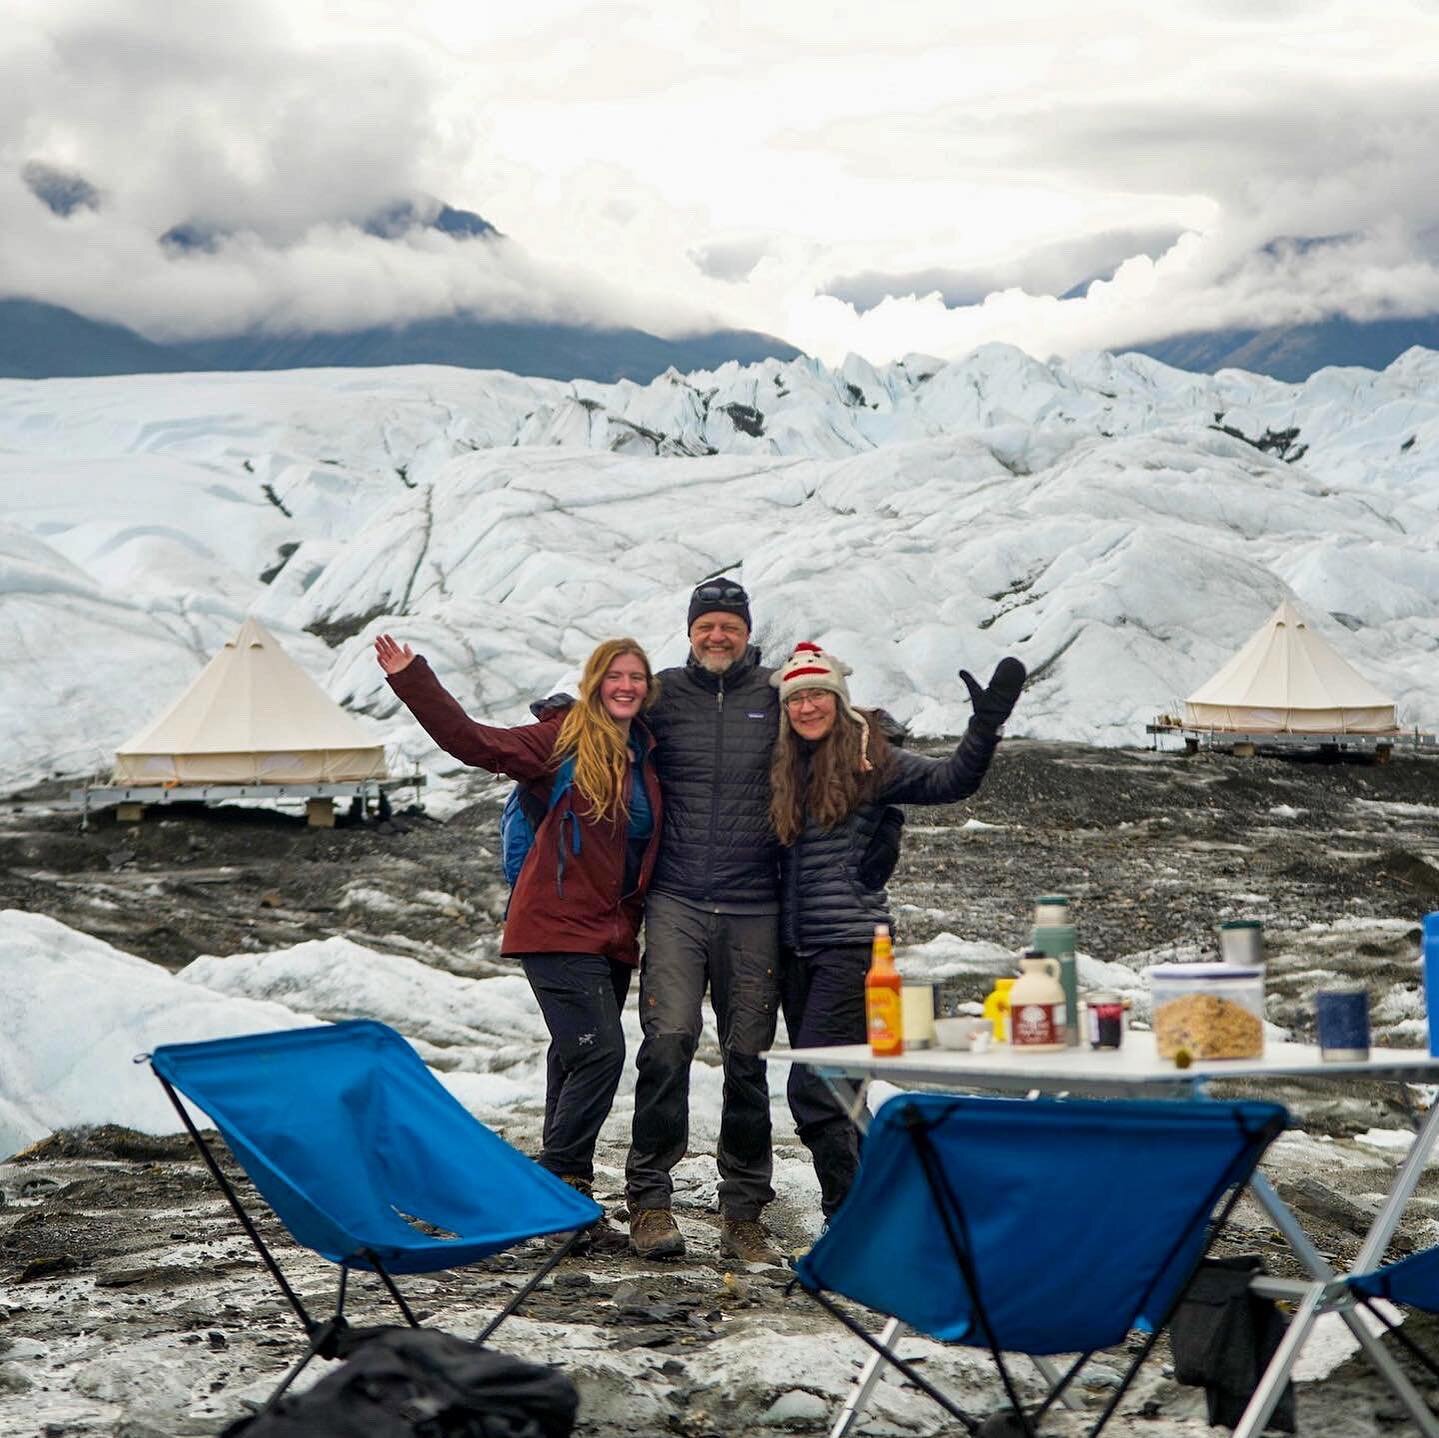 All smiles at Glacier Camp😆😍
.
.
.

#alpenglow #luxurycamping #glamping  #alaska #alaskalife #matanuskaglacier #glacier #exposure #adventure #explore #livemore #exploremore #alaskaliving #alaskaadventure #glaciercamp #summer23 #alaskaglamping #alas